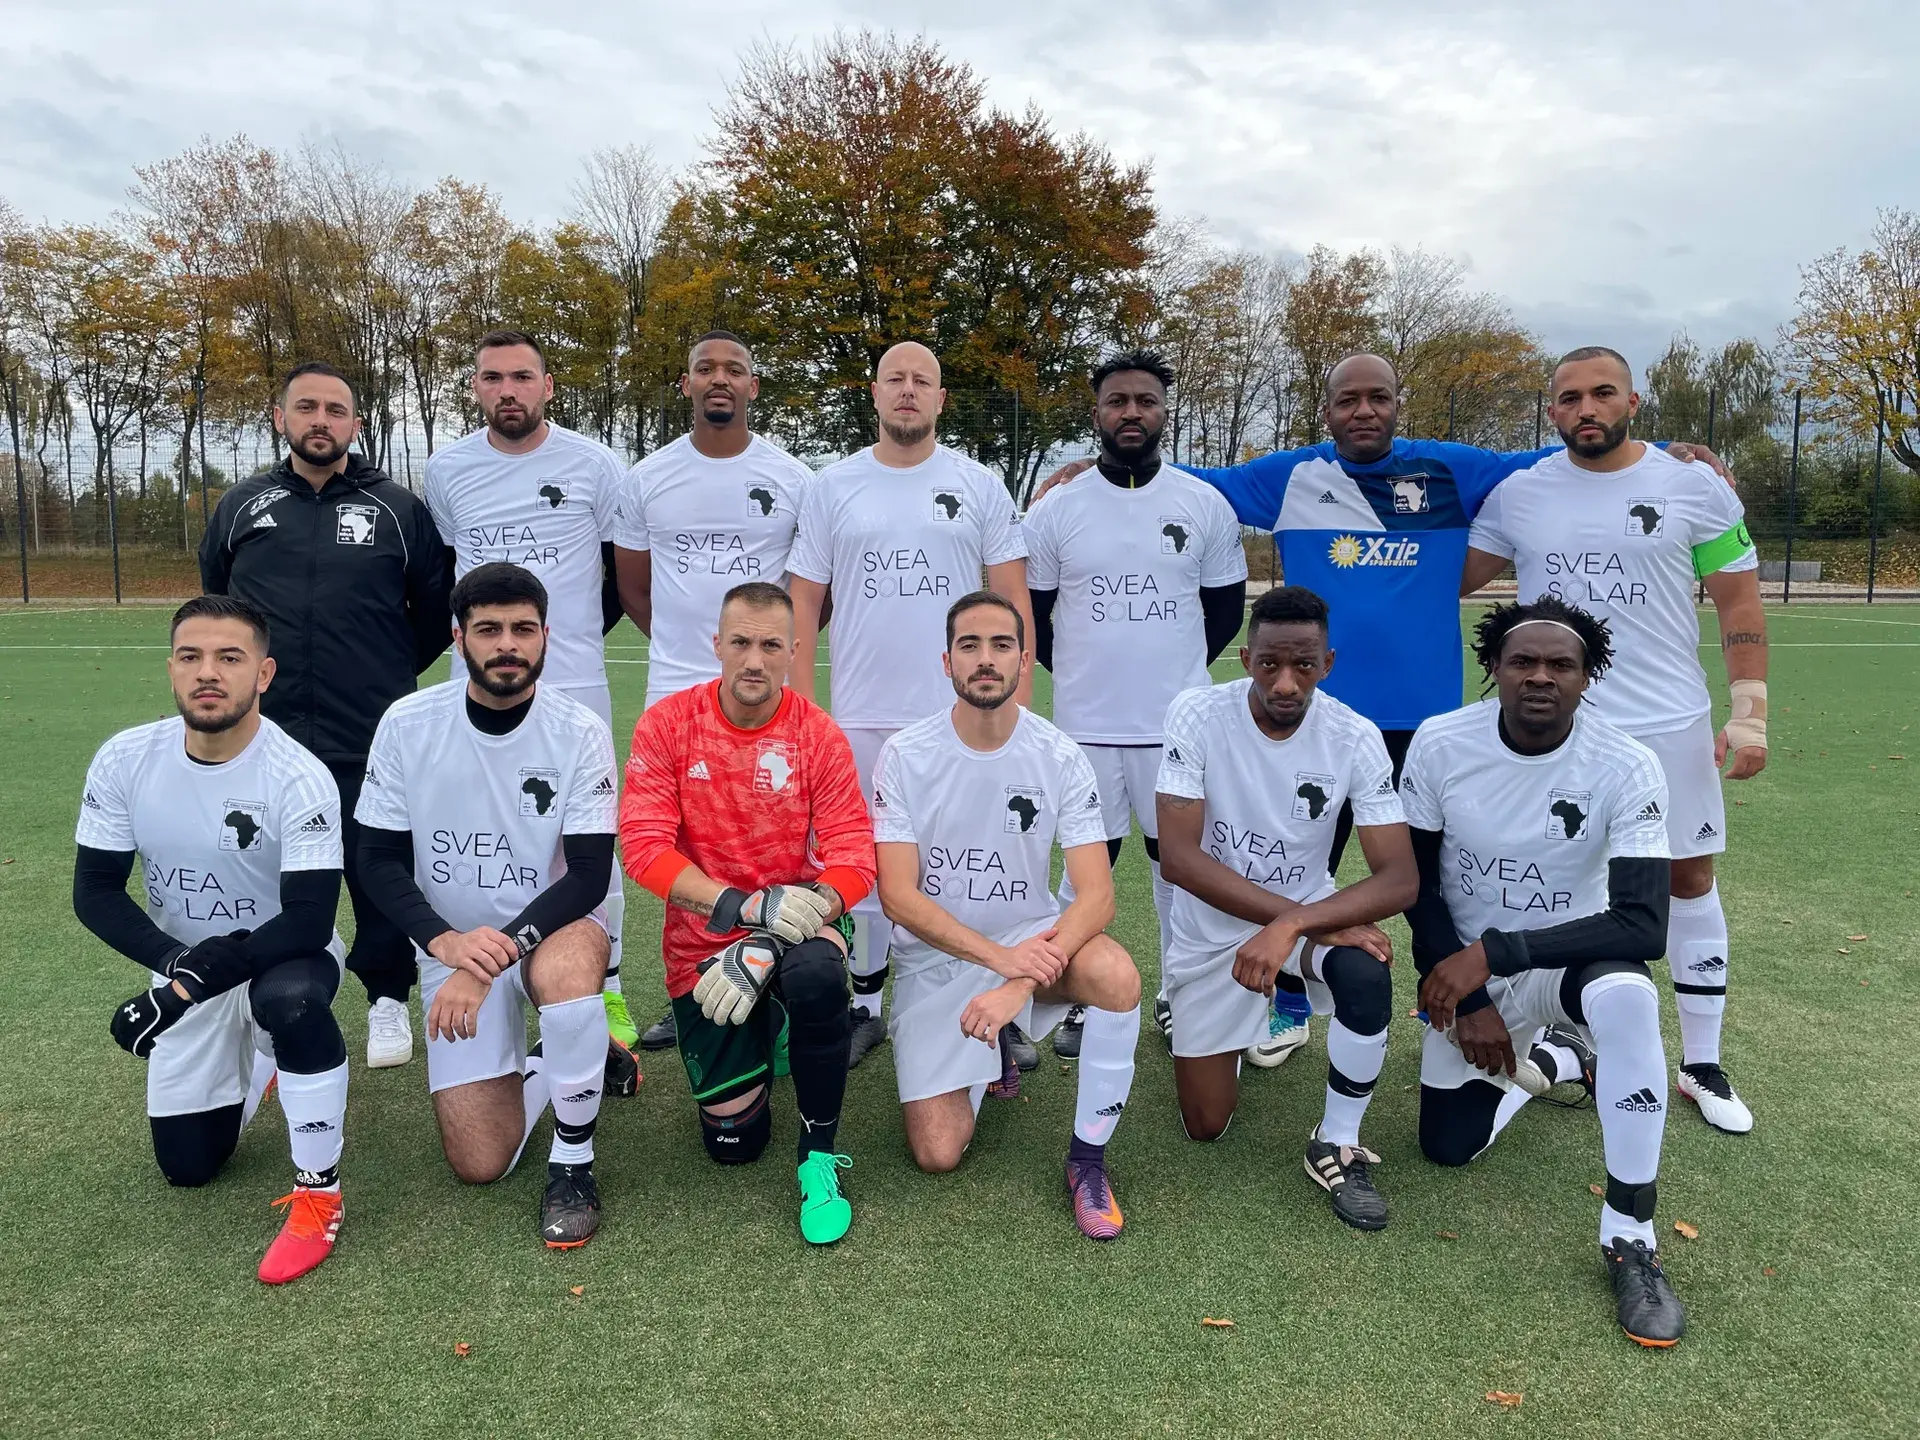 Svea Solar unterstützt den lokalen Verein "Afrika Fußball Club Köln e.V."